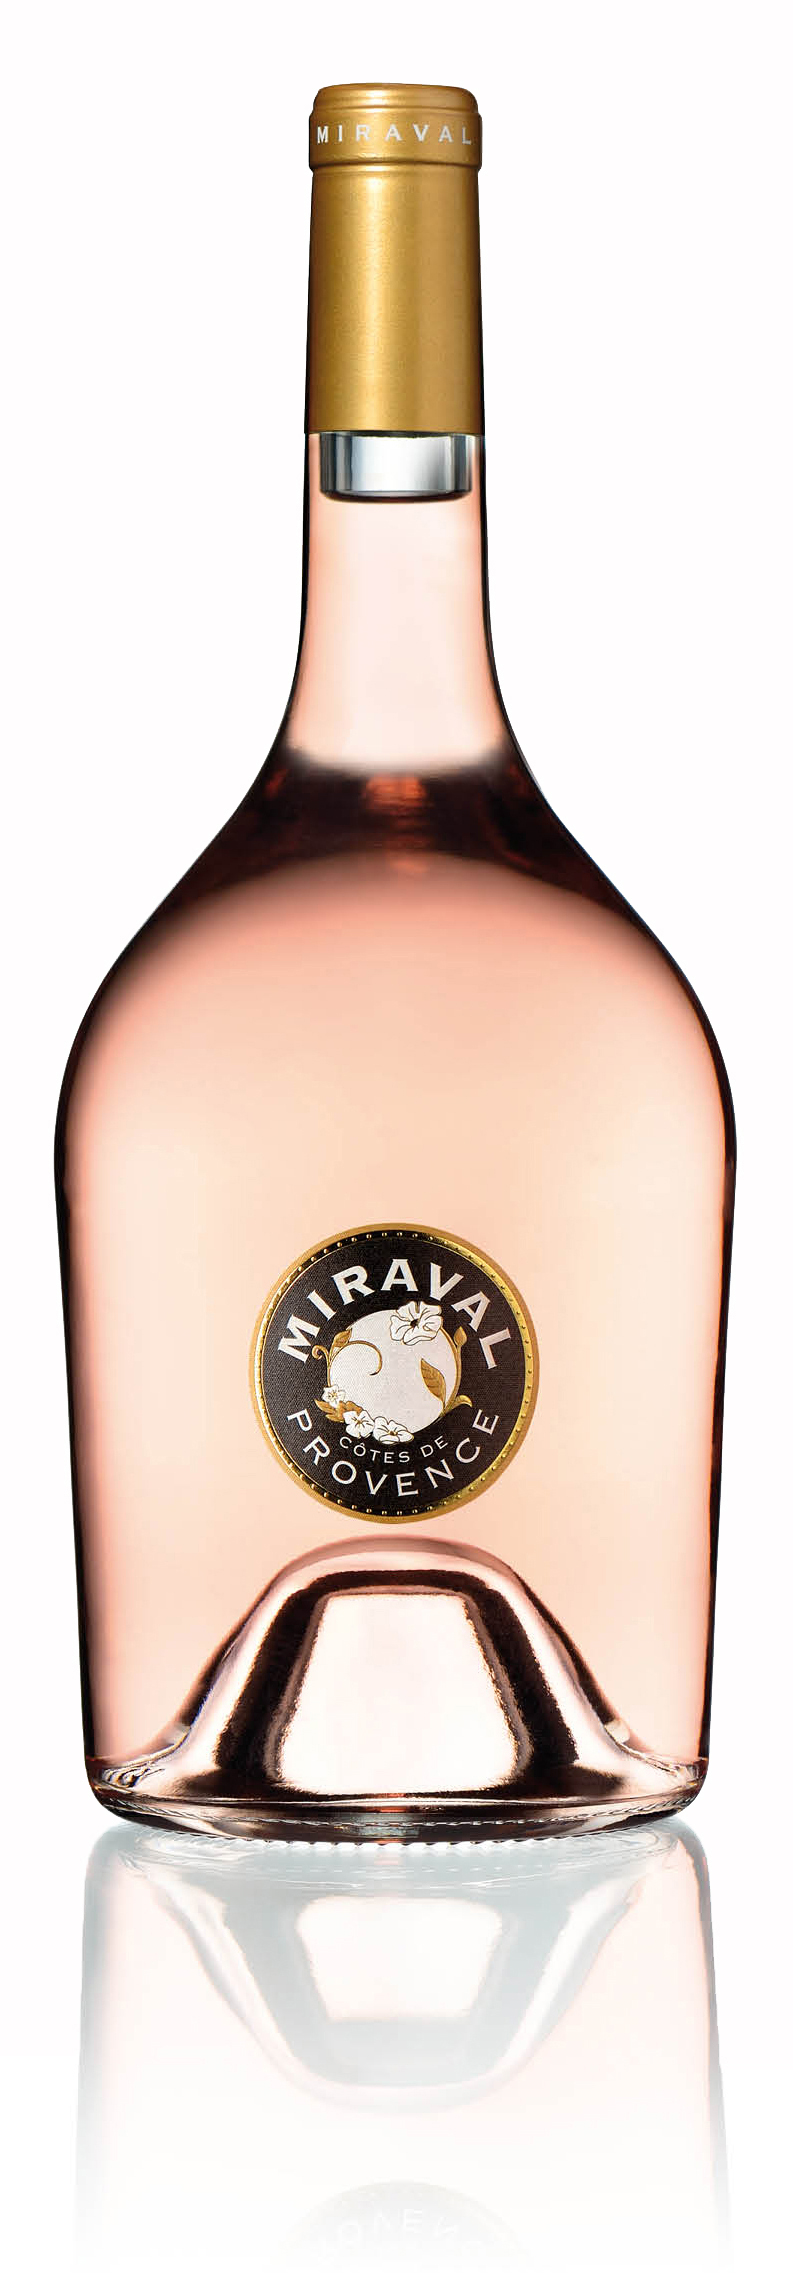 Miraval_bottleshot_Rose Provence 150CL